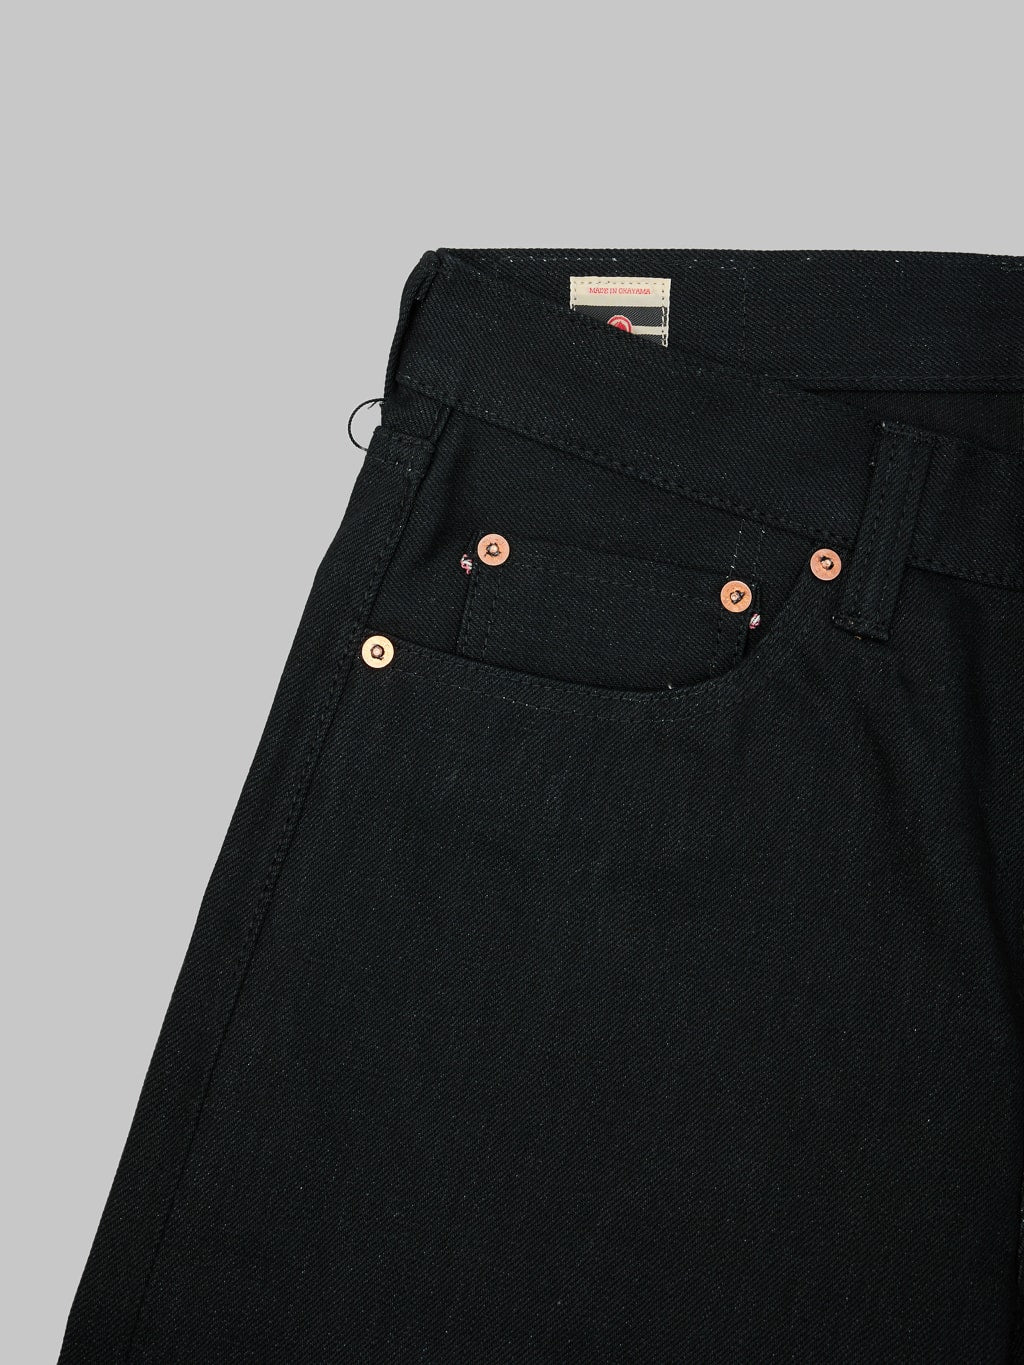 momotaro 0405b selvedge black denim high tapered jeans coin pocket